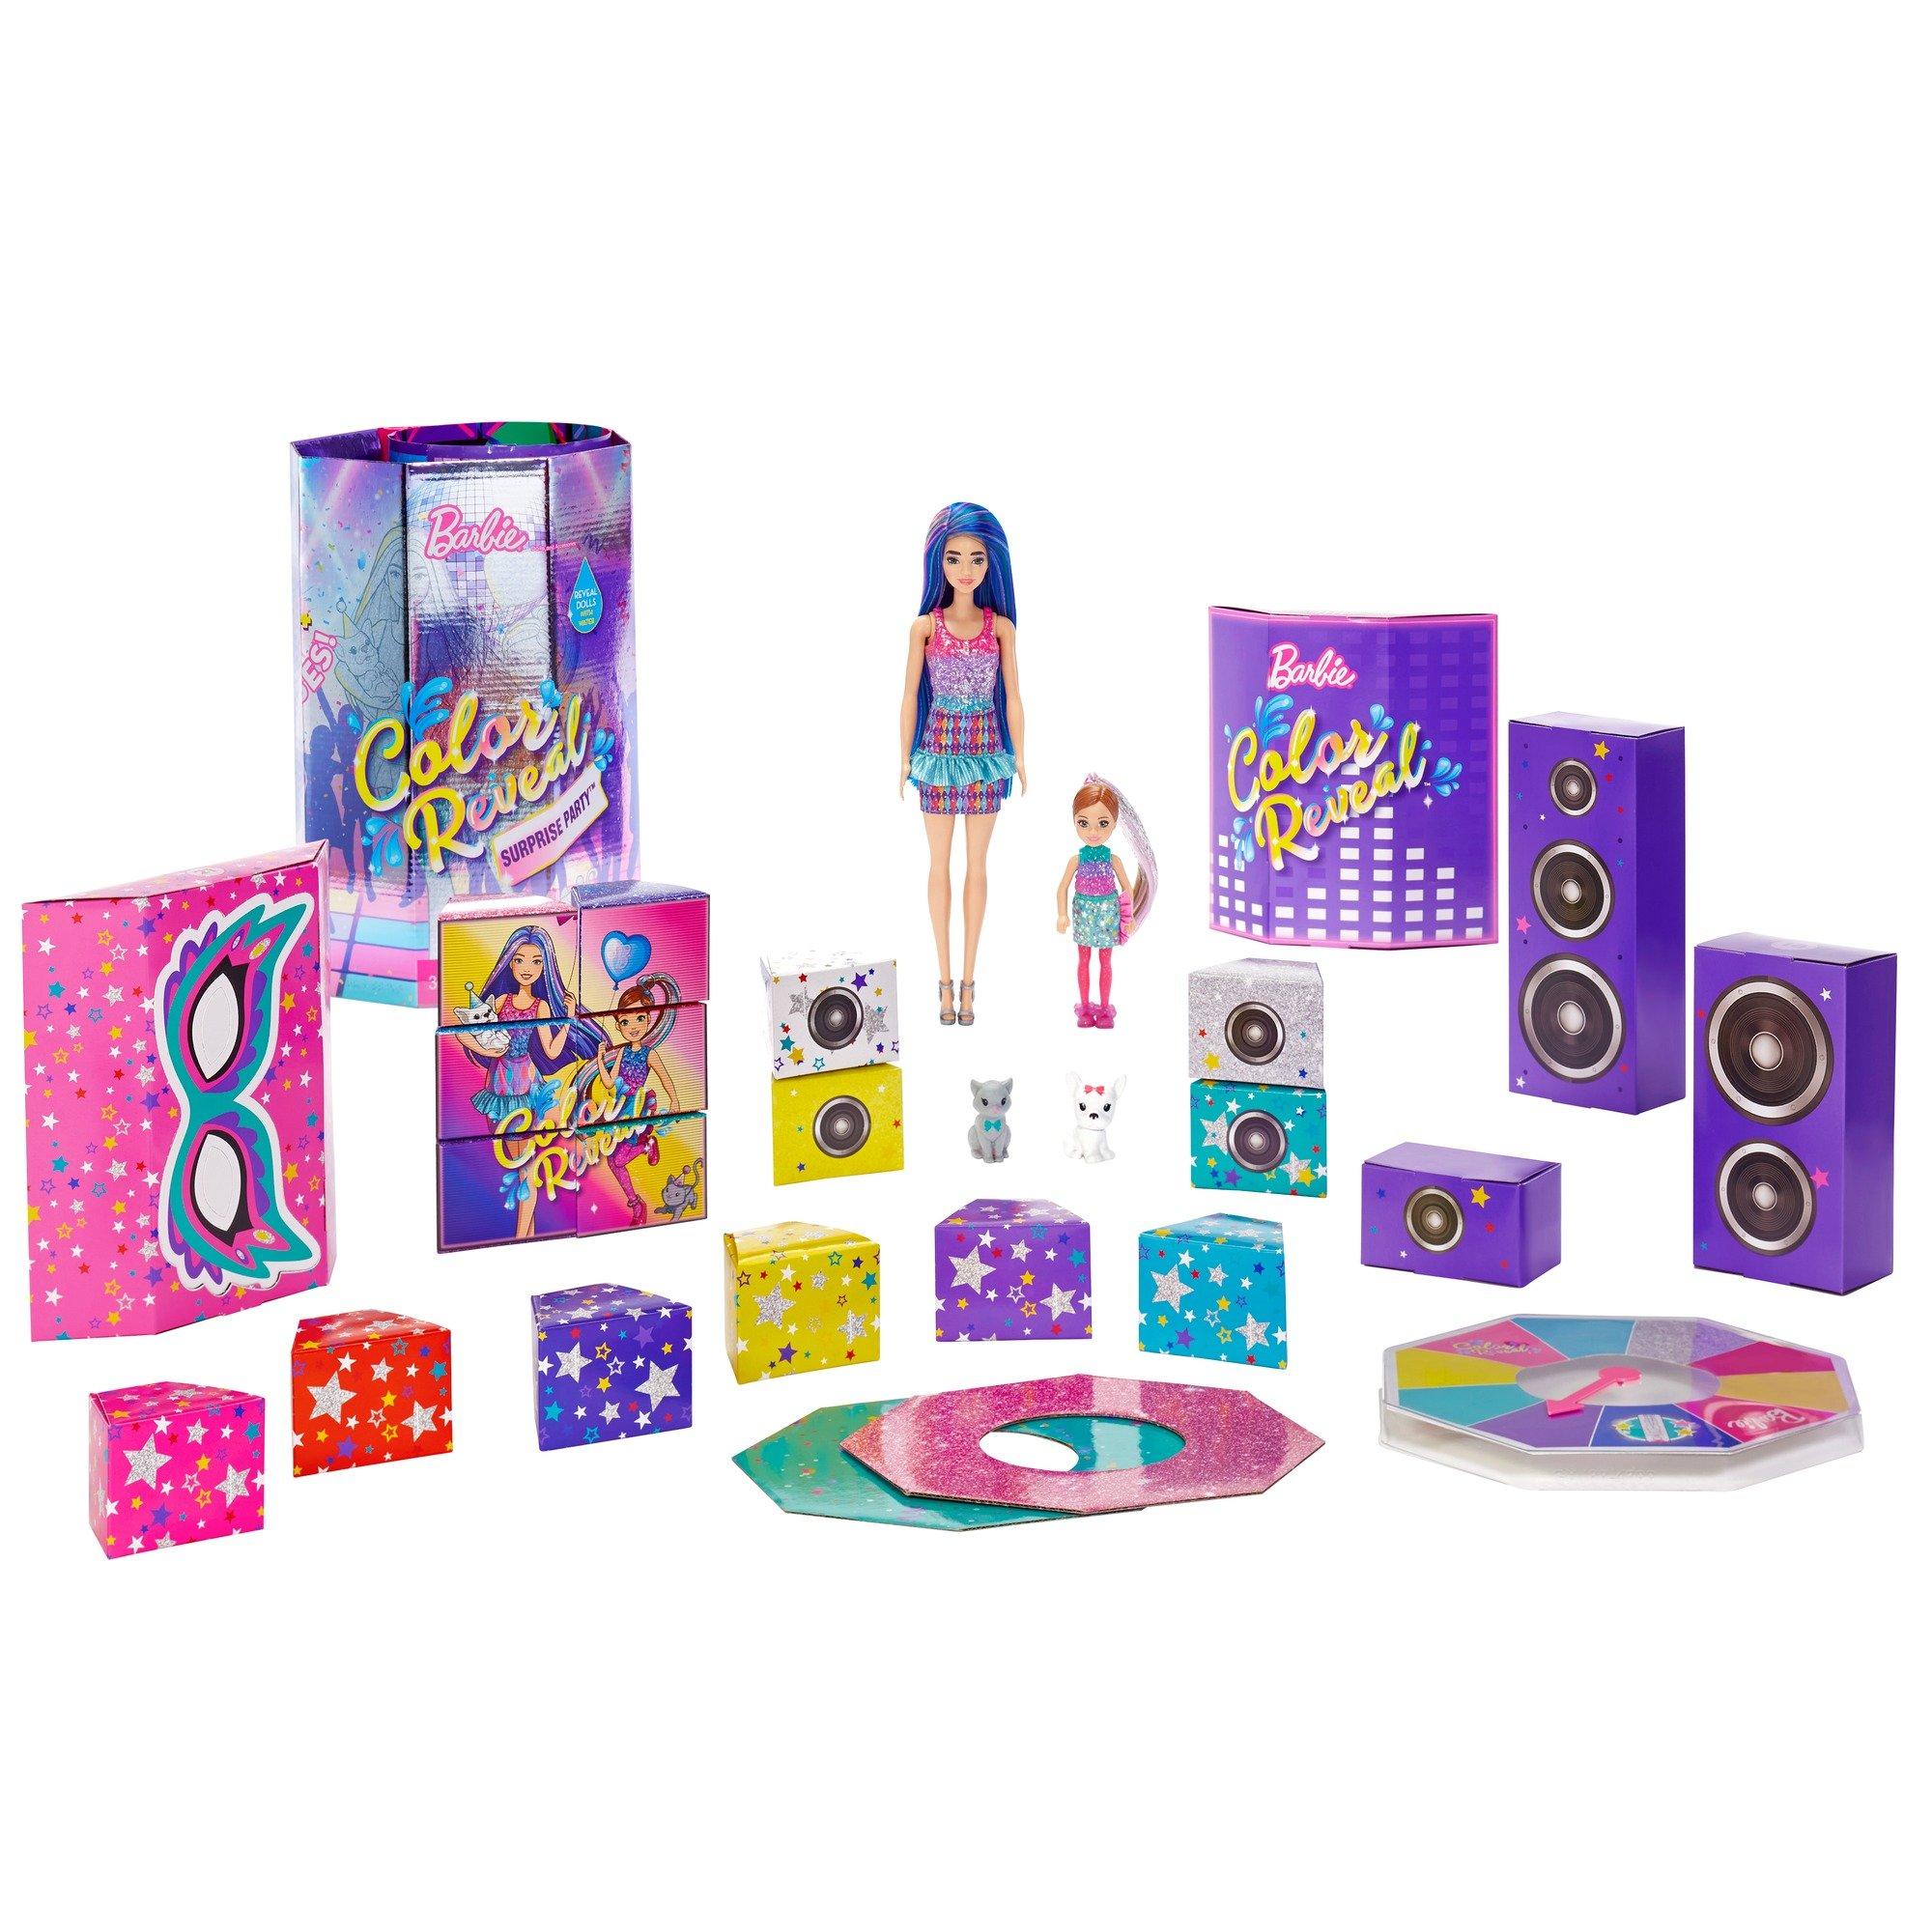 Barbie Color Reveal Surprise Party Set w/ 50+ Surprises $24.99 + Free Shipping w/ Prime or $25+